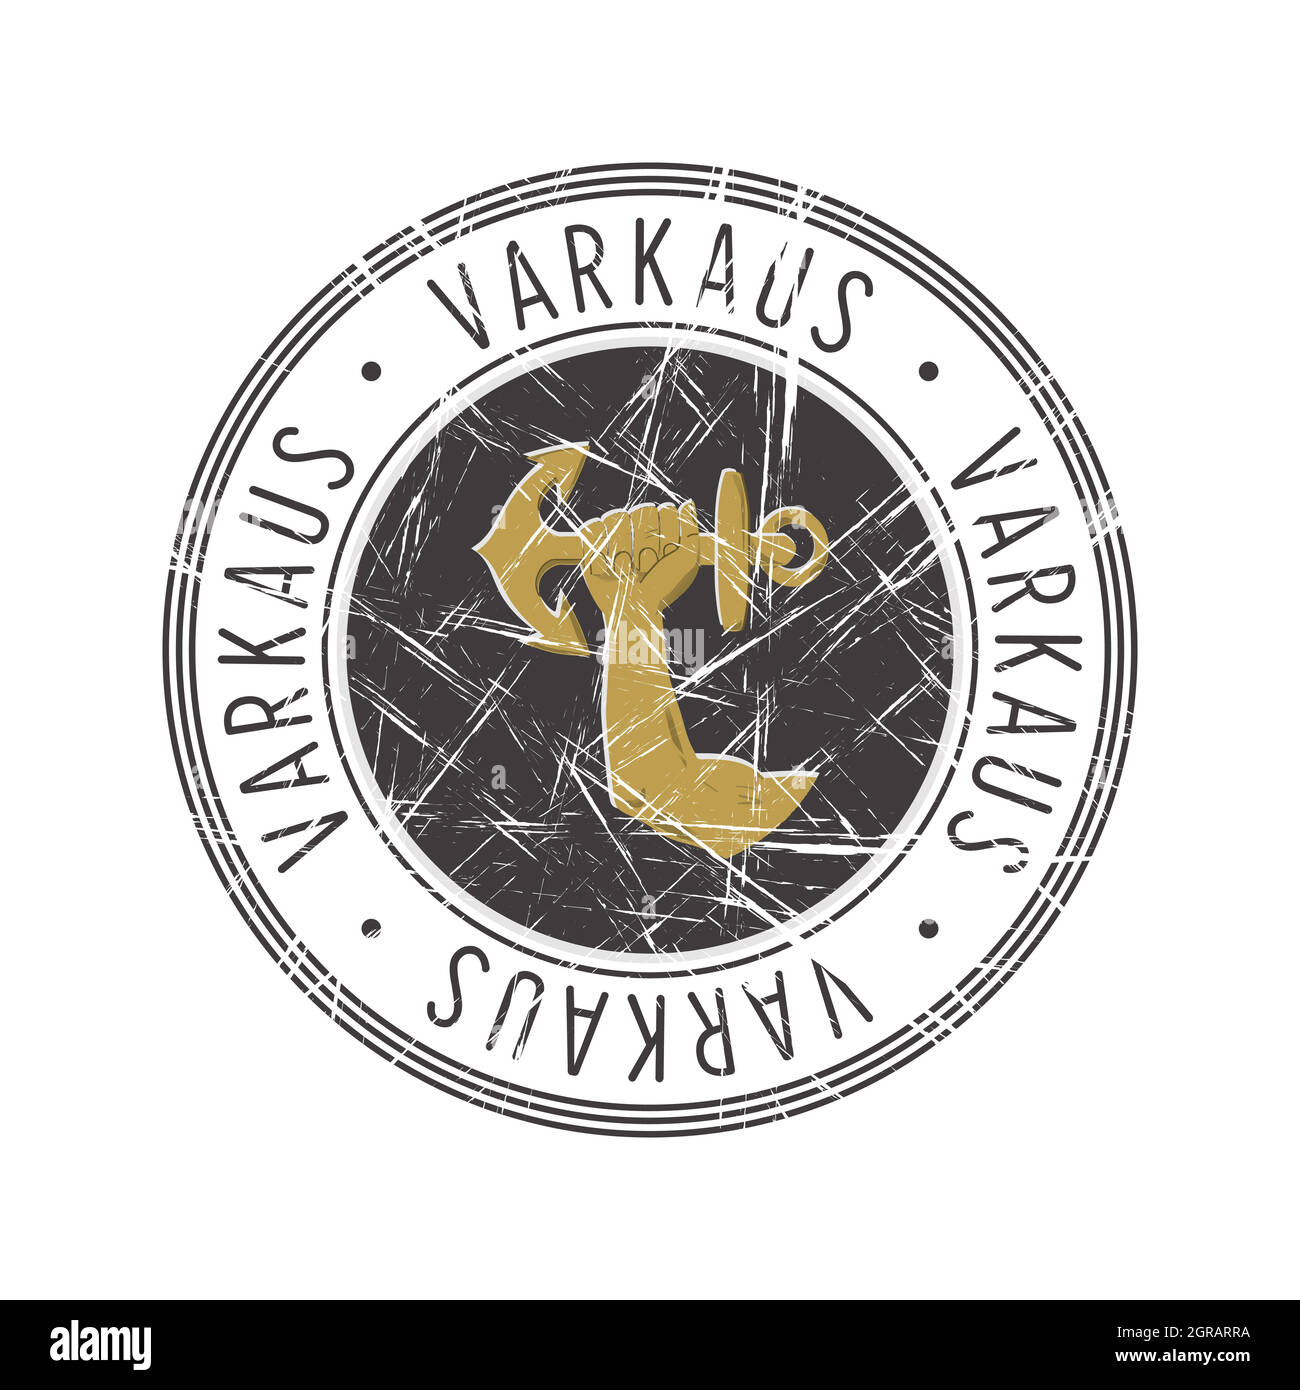 Varkaus city postal rubber stamp Stock Vector